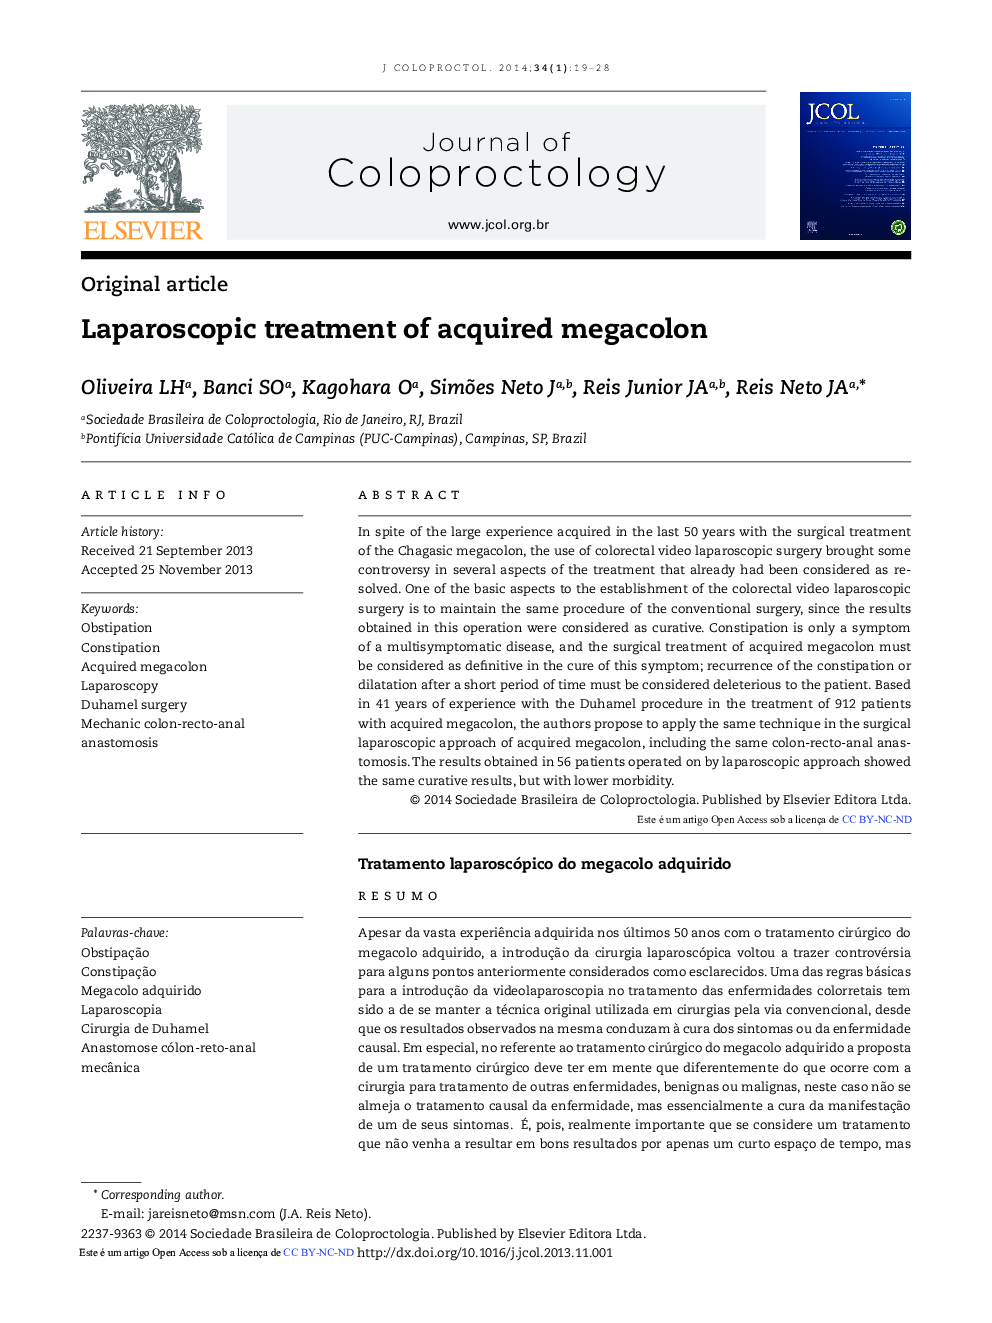 Laparoscopic treatment of acquired megacolon